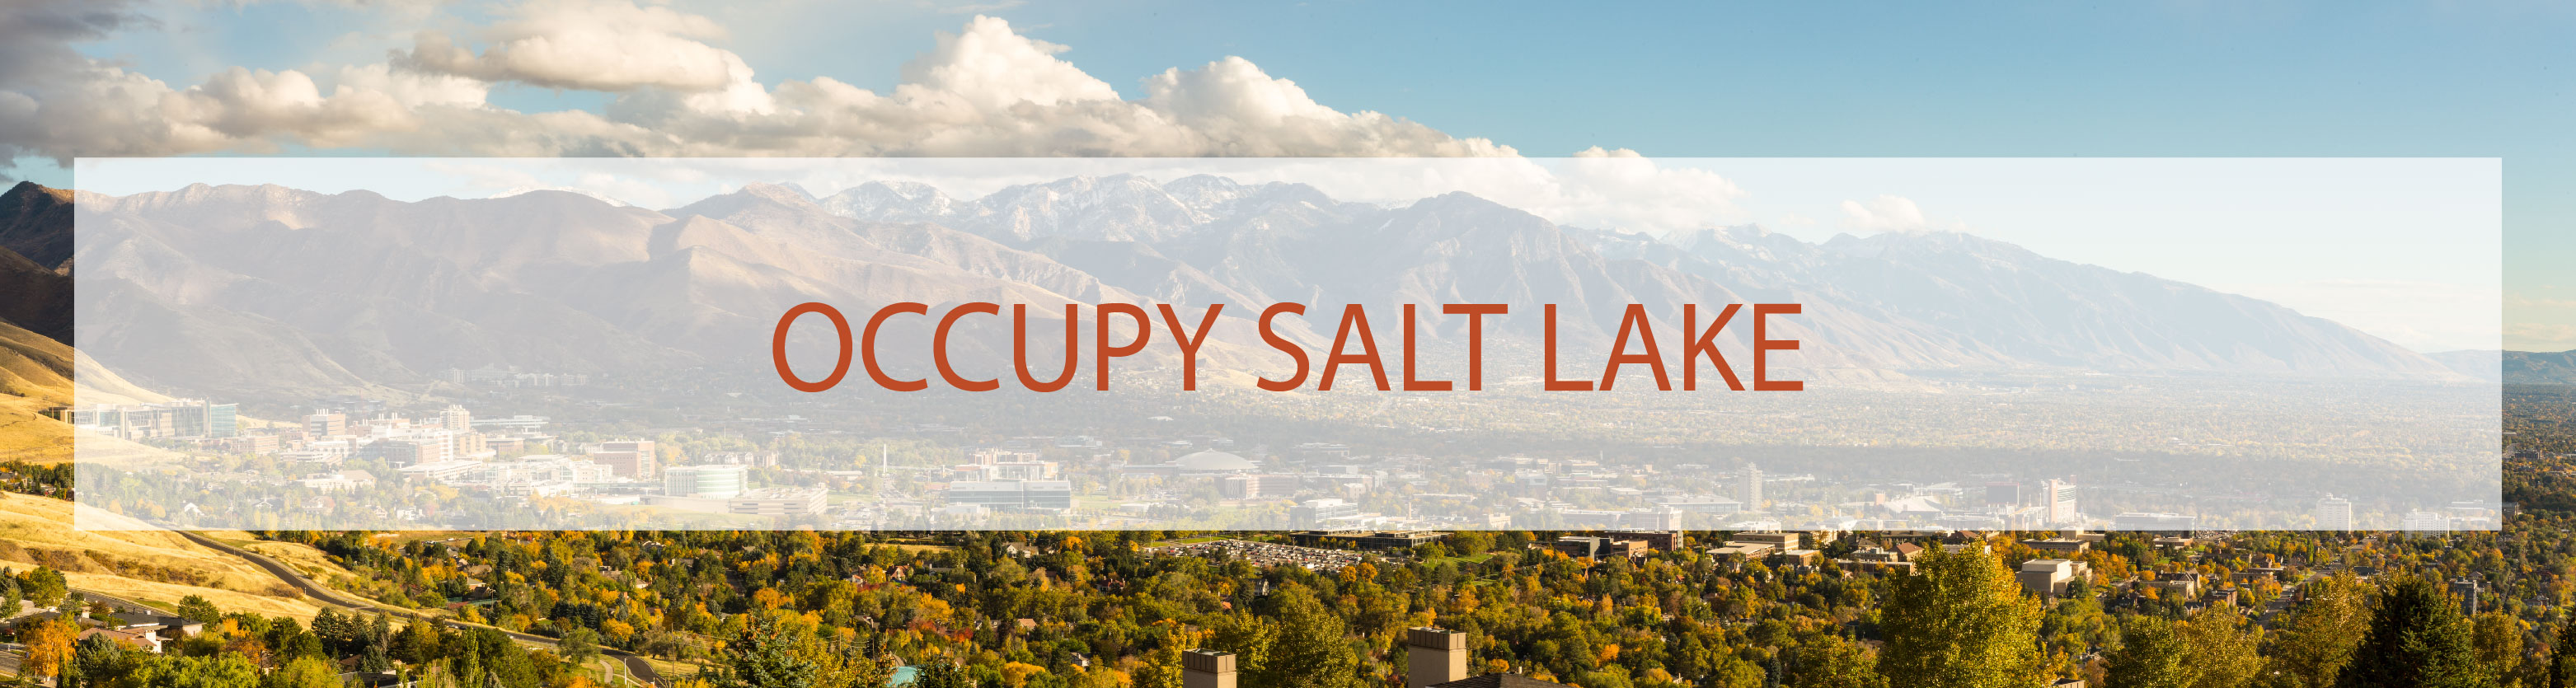 Occupy Salt Lake